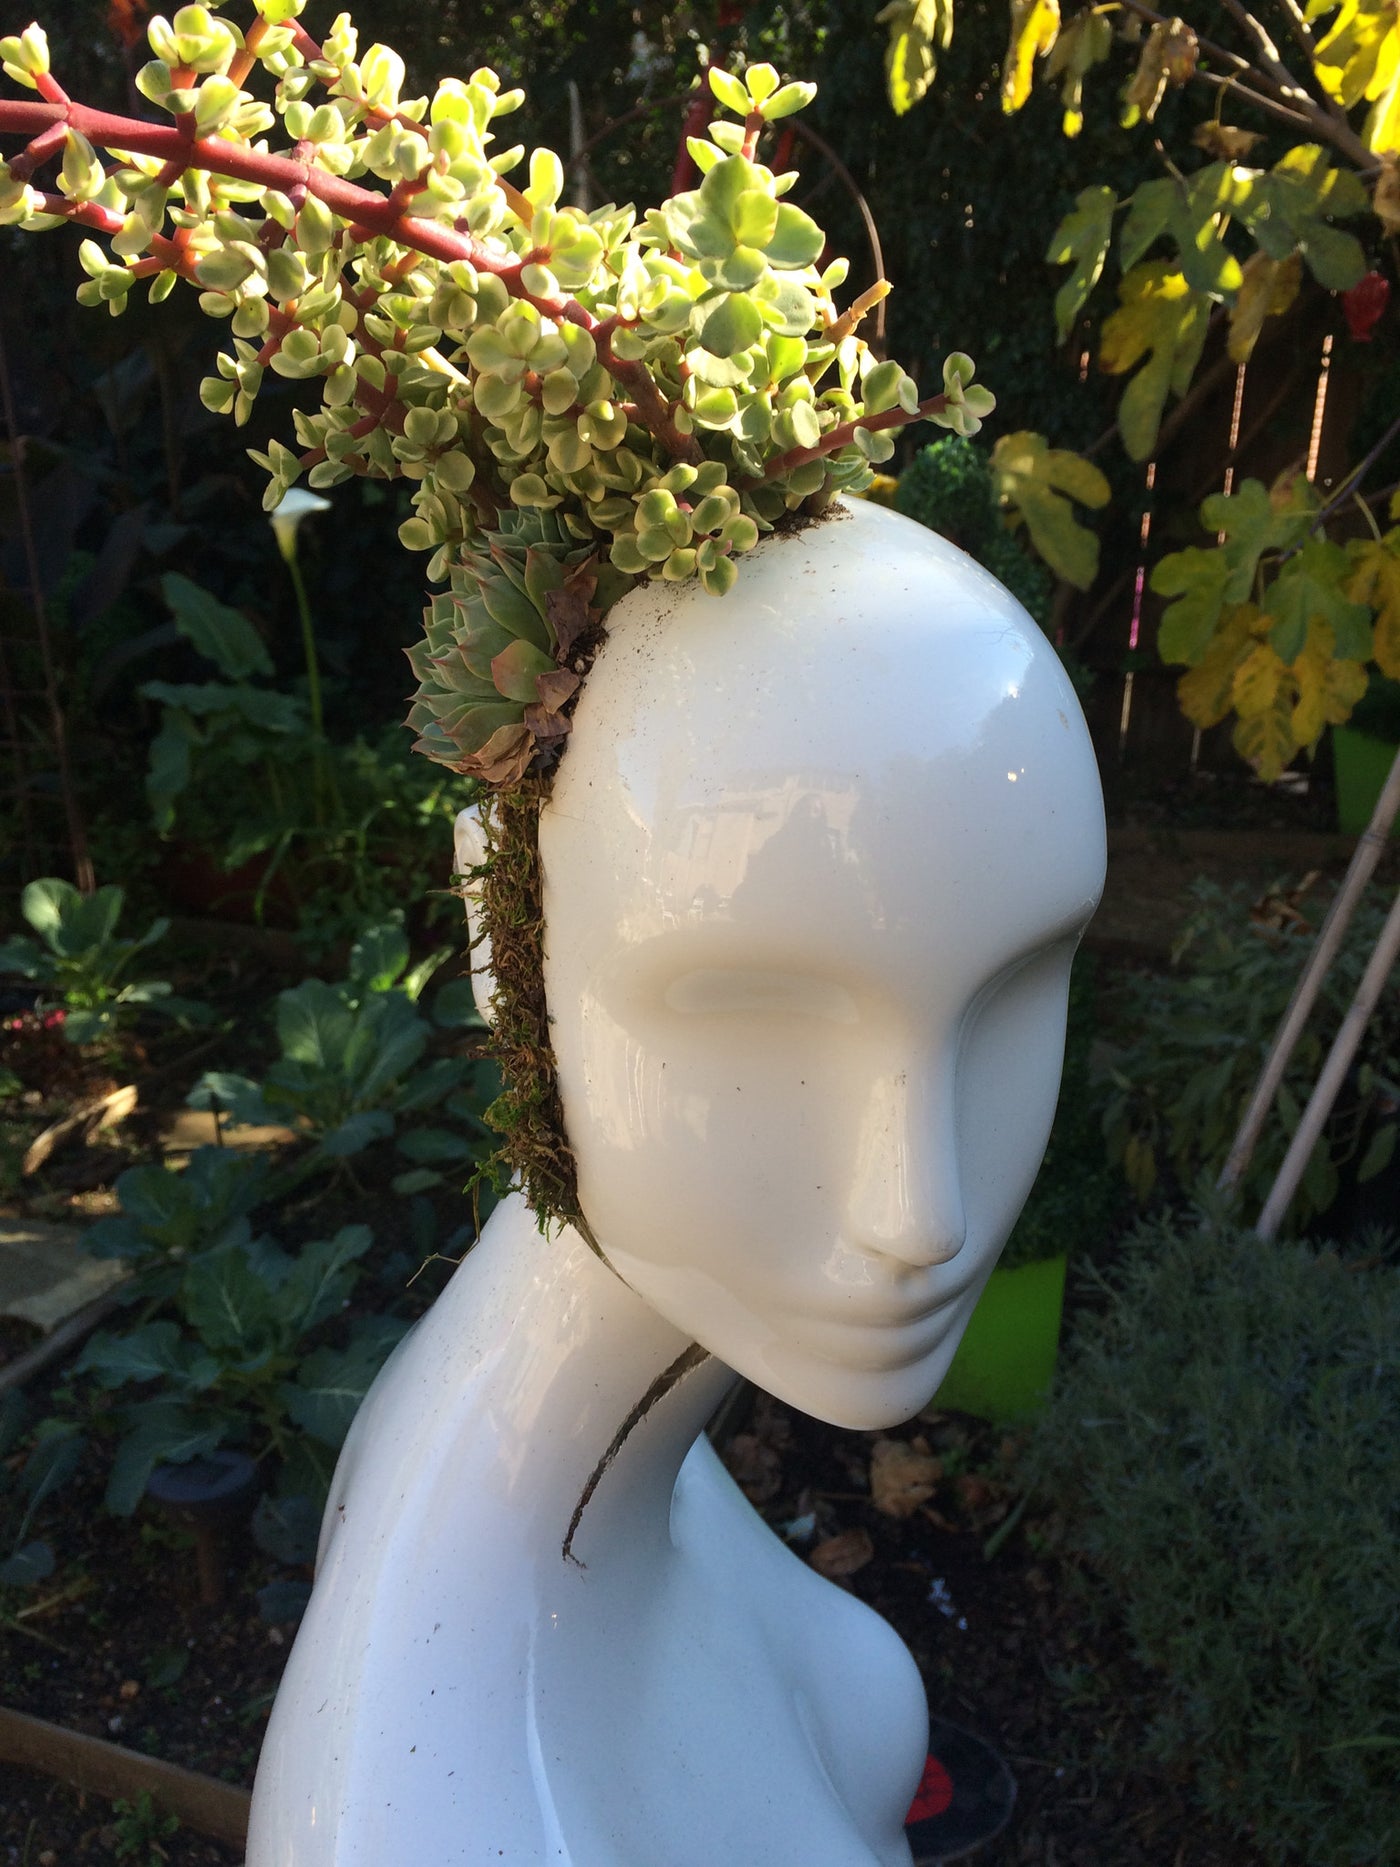 EBook Tutorial: Floral & Succulent Mannequin Head Display